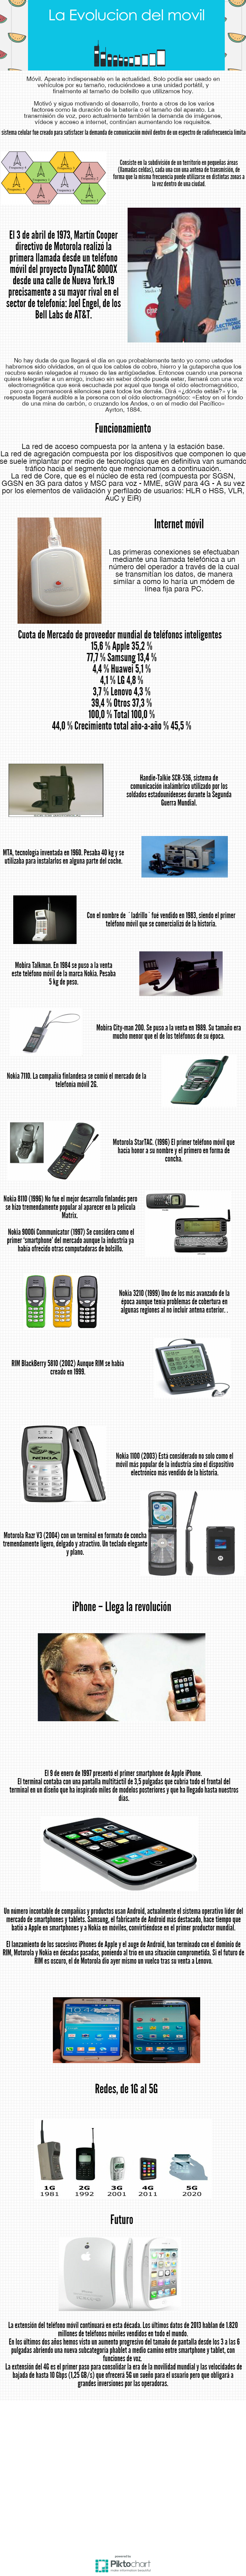 Historia de la telefonia movil